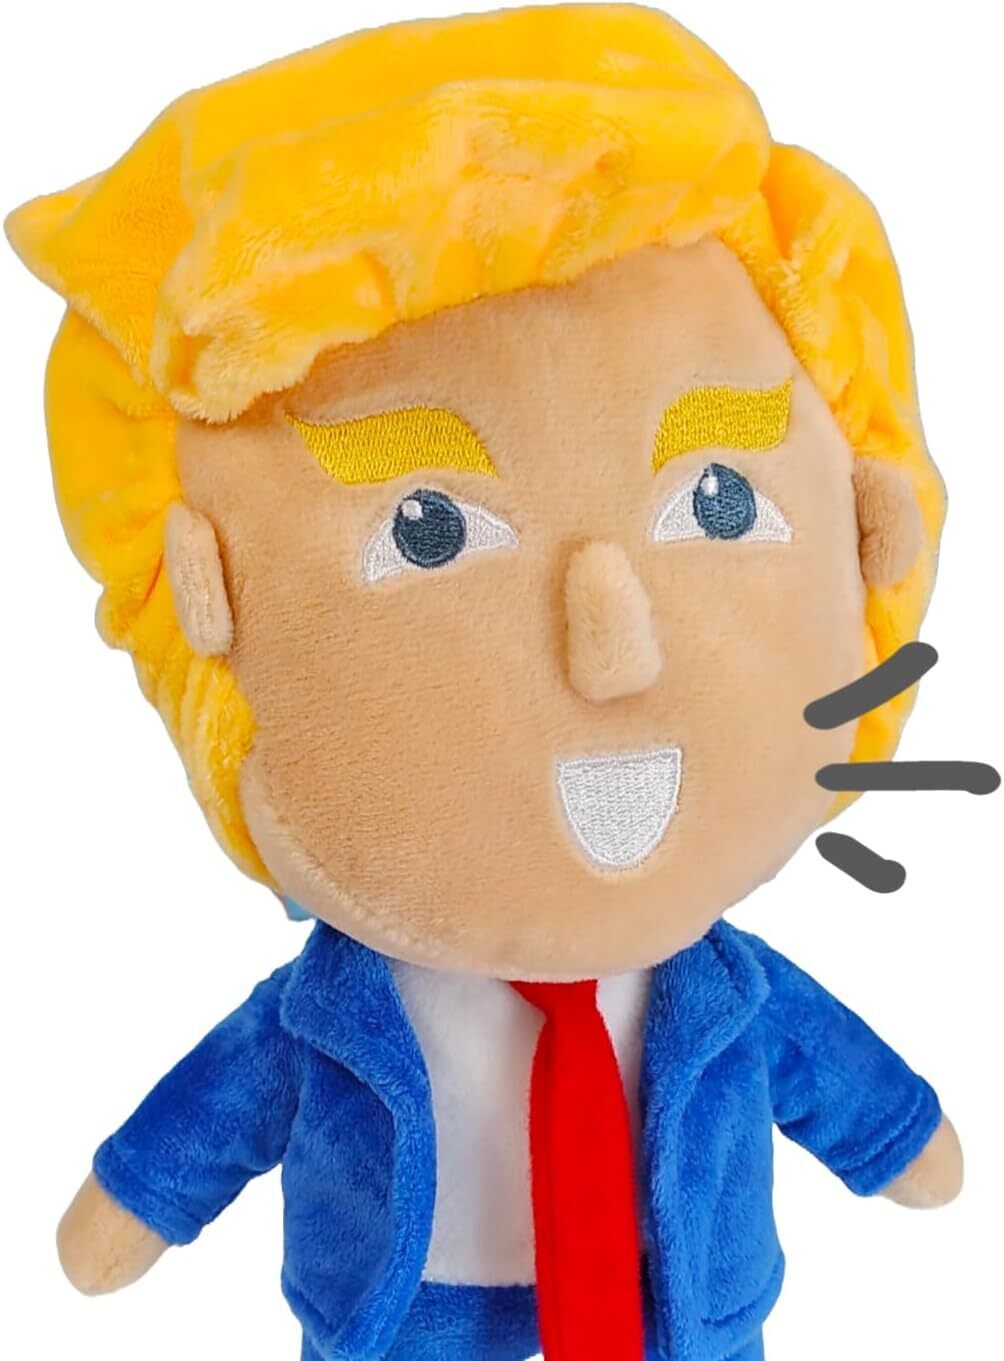 Talking Stunning plush Donald  Trump doll speaks 20 phrases toy figure FUN kids